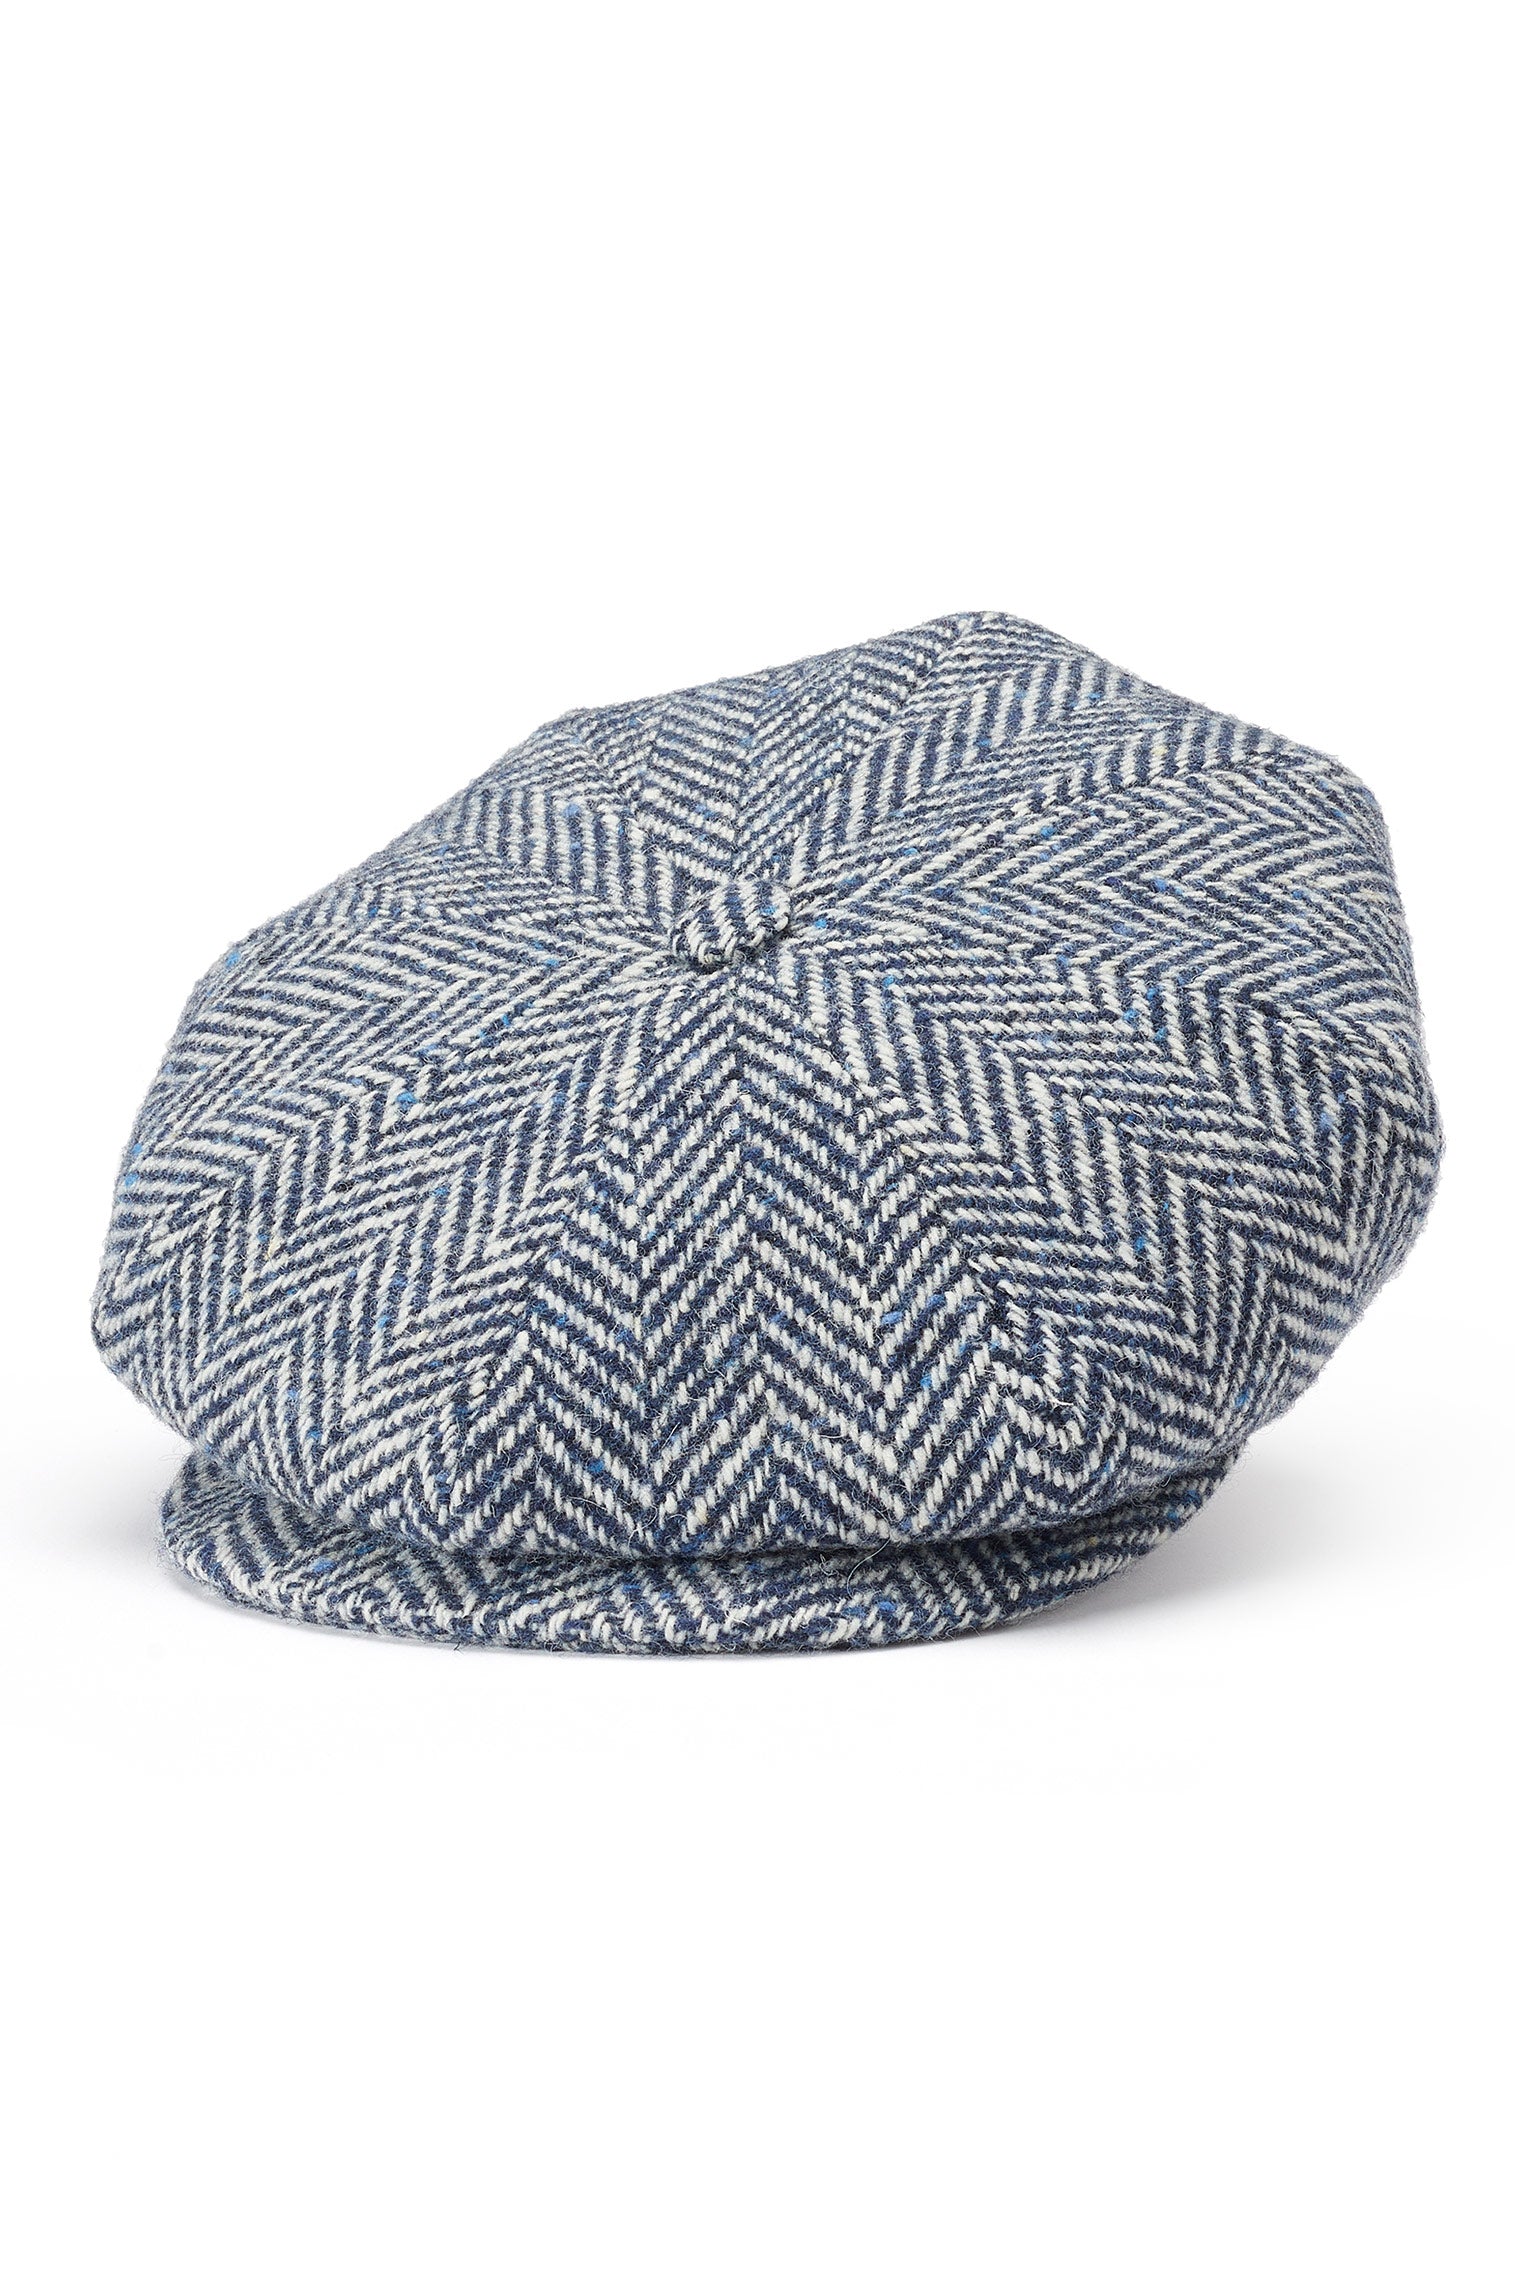 Muirfield Herringbone Bakerboy Cap - Hats for Round Face Shapes - Lock & Co. Hatters London UK